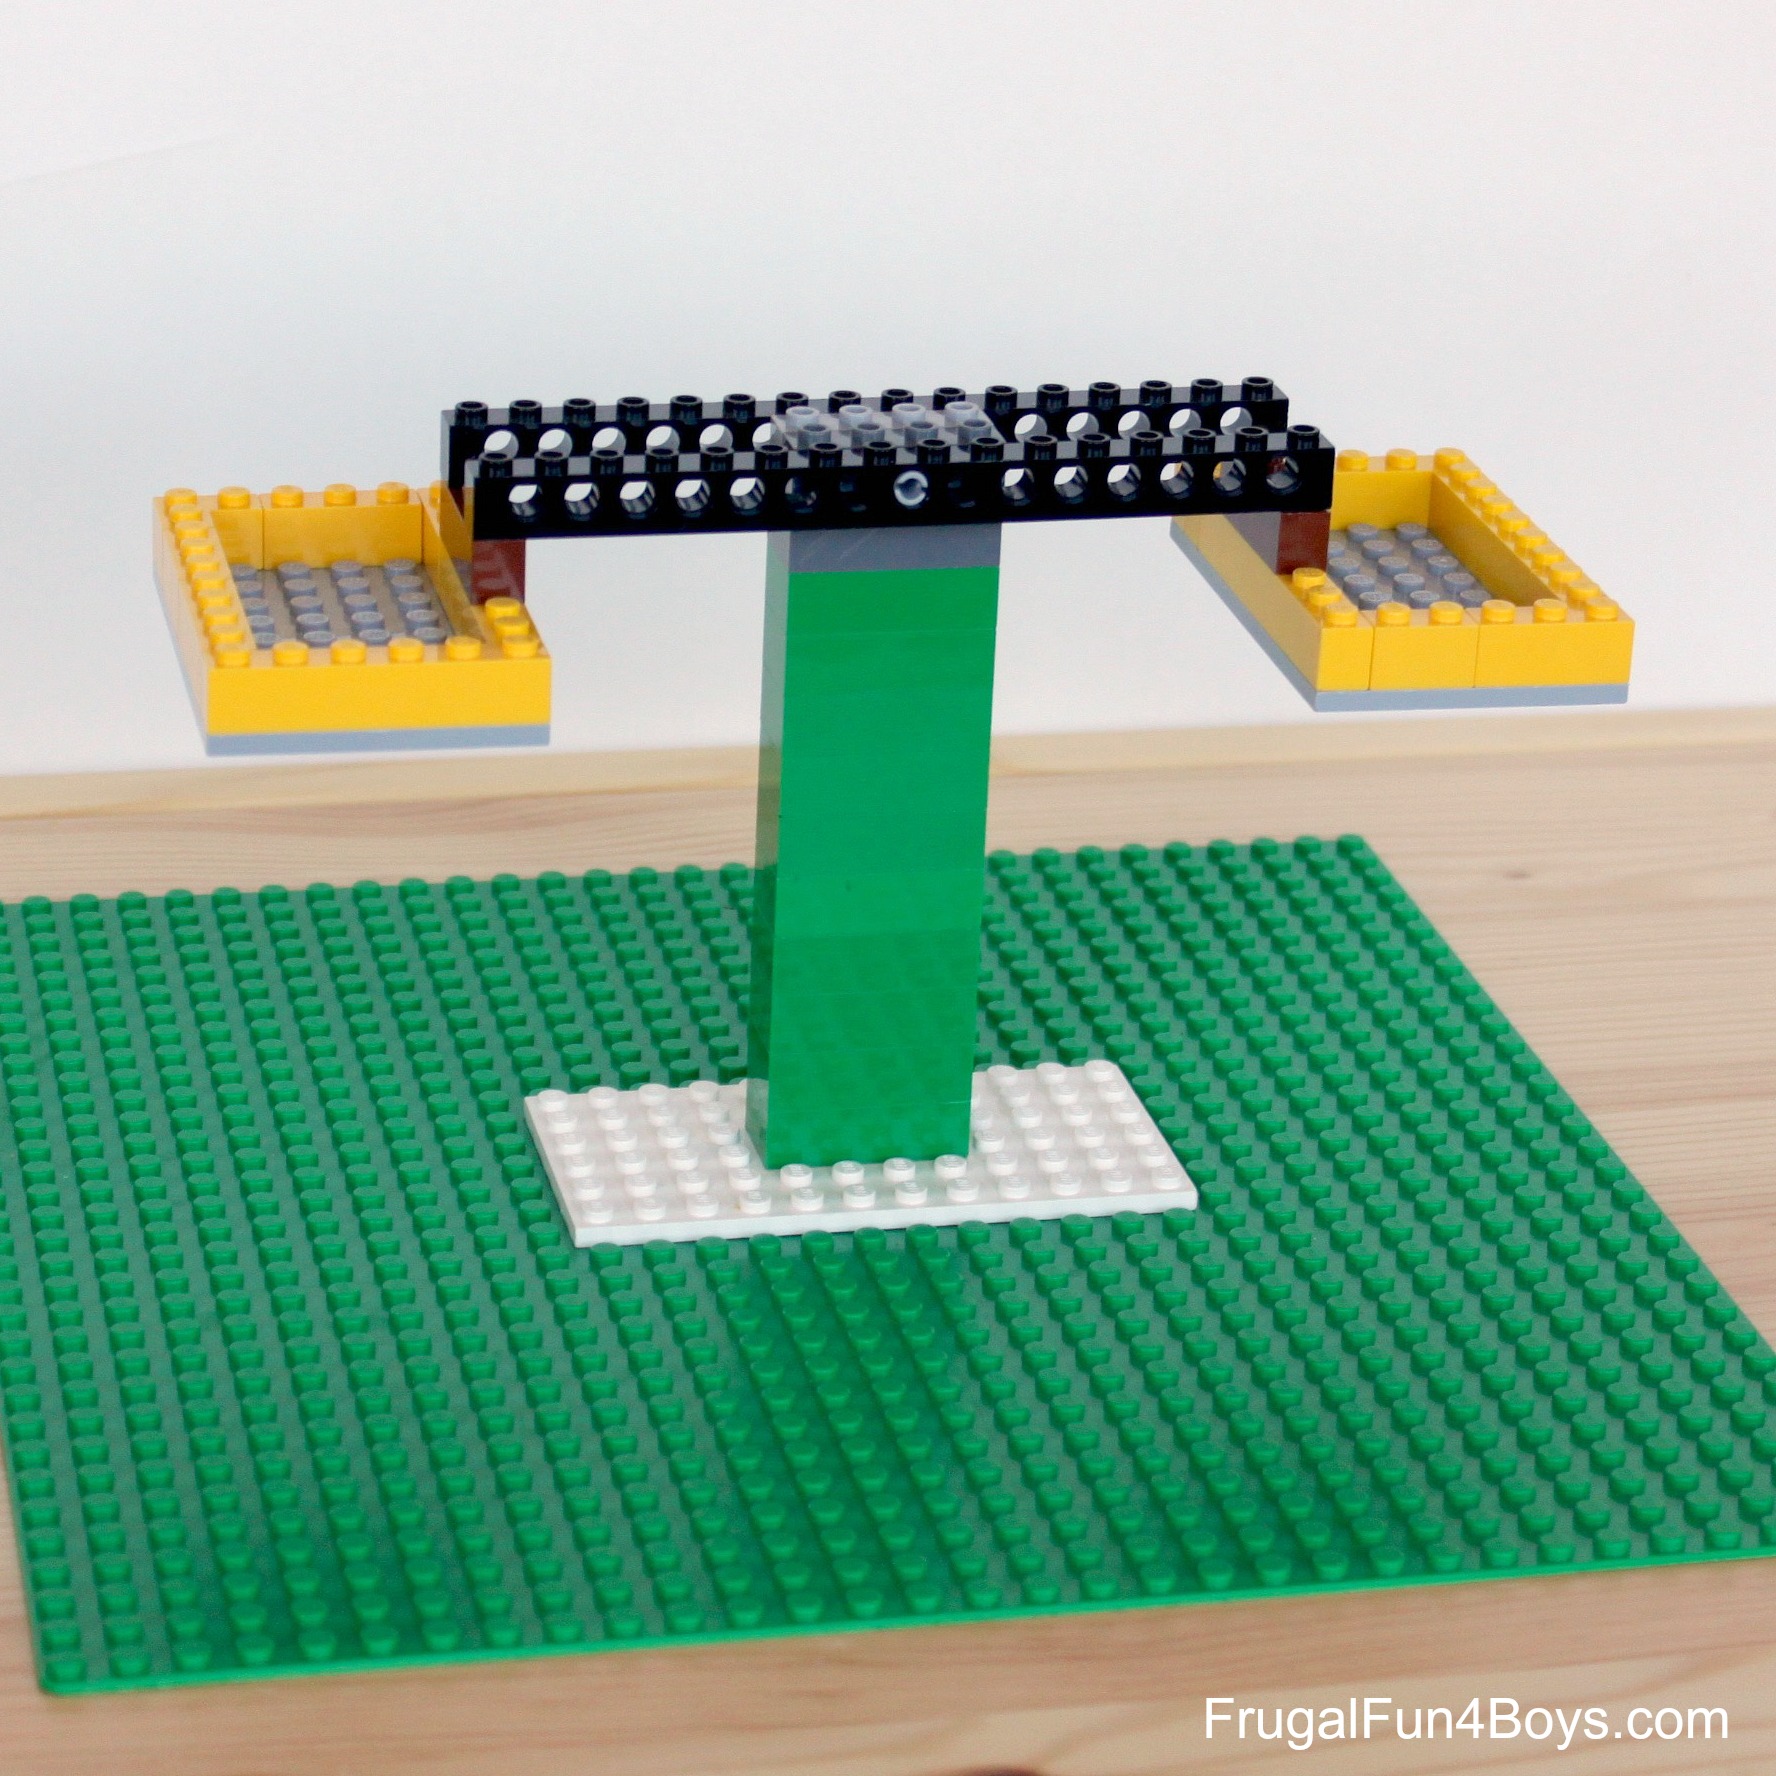 Build a LEGO Balance - Math Activity for Kids